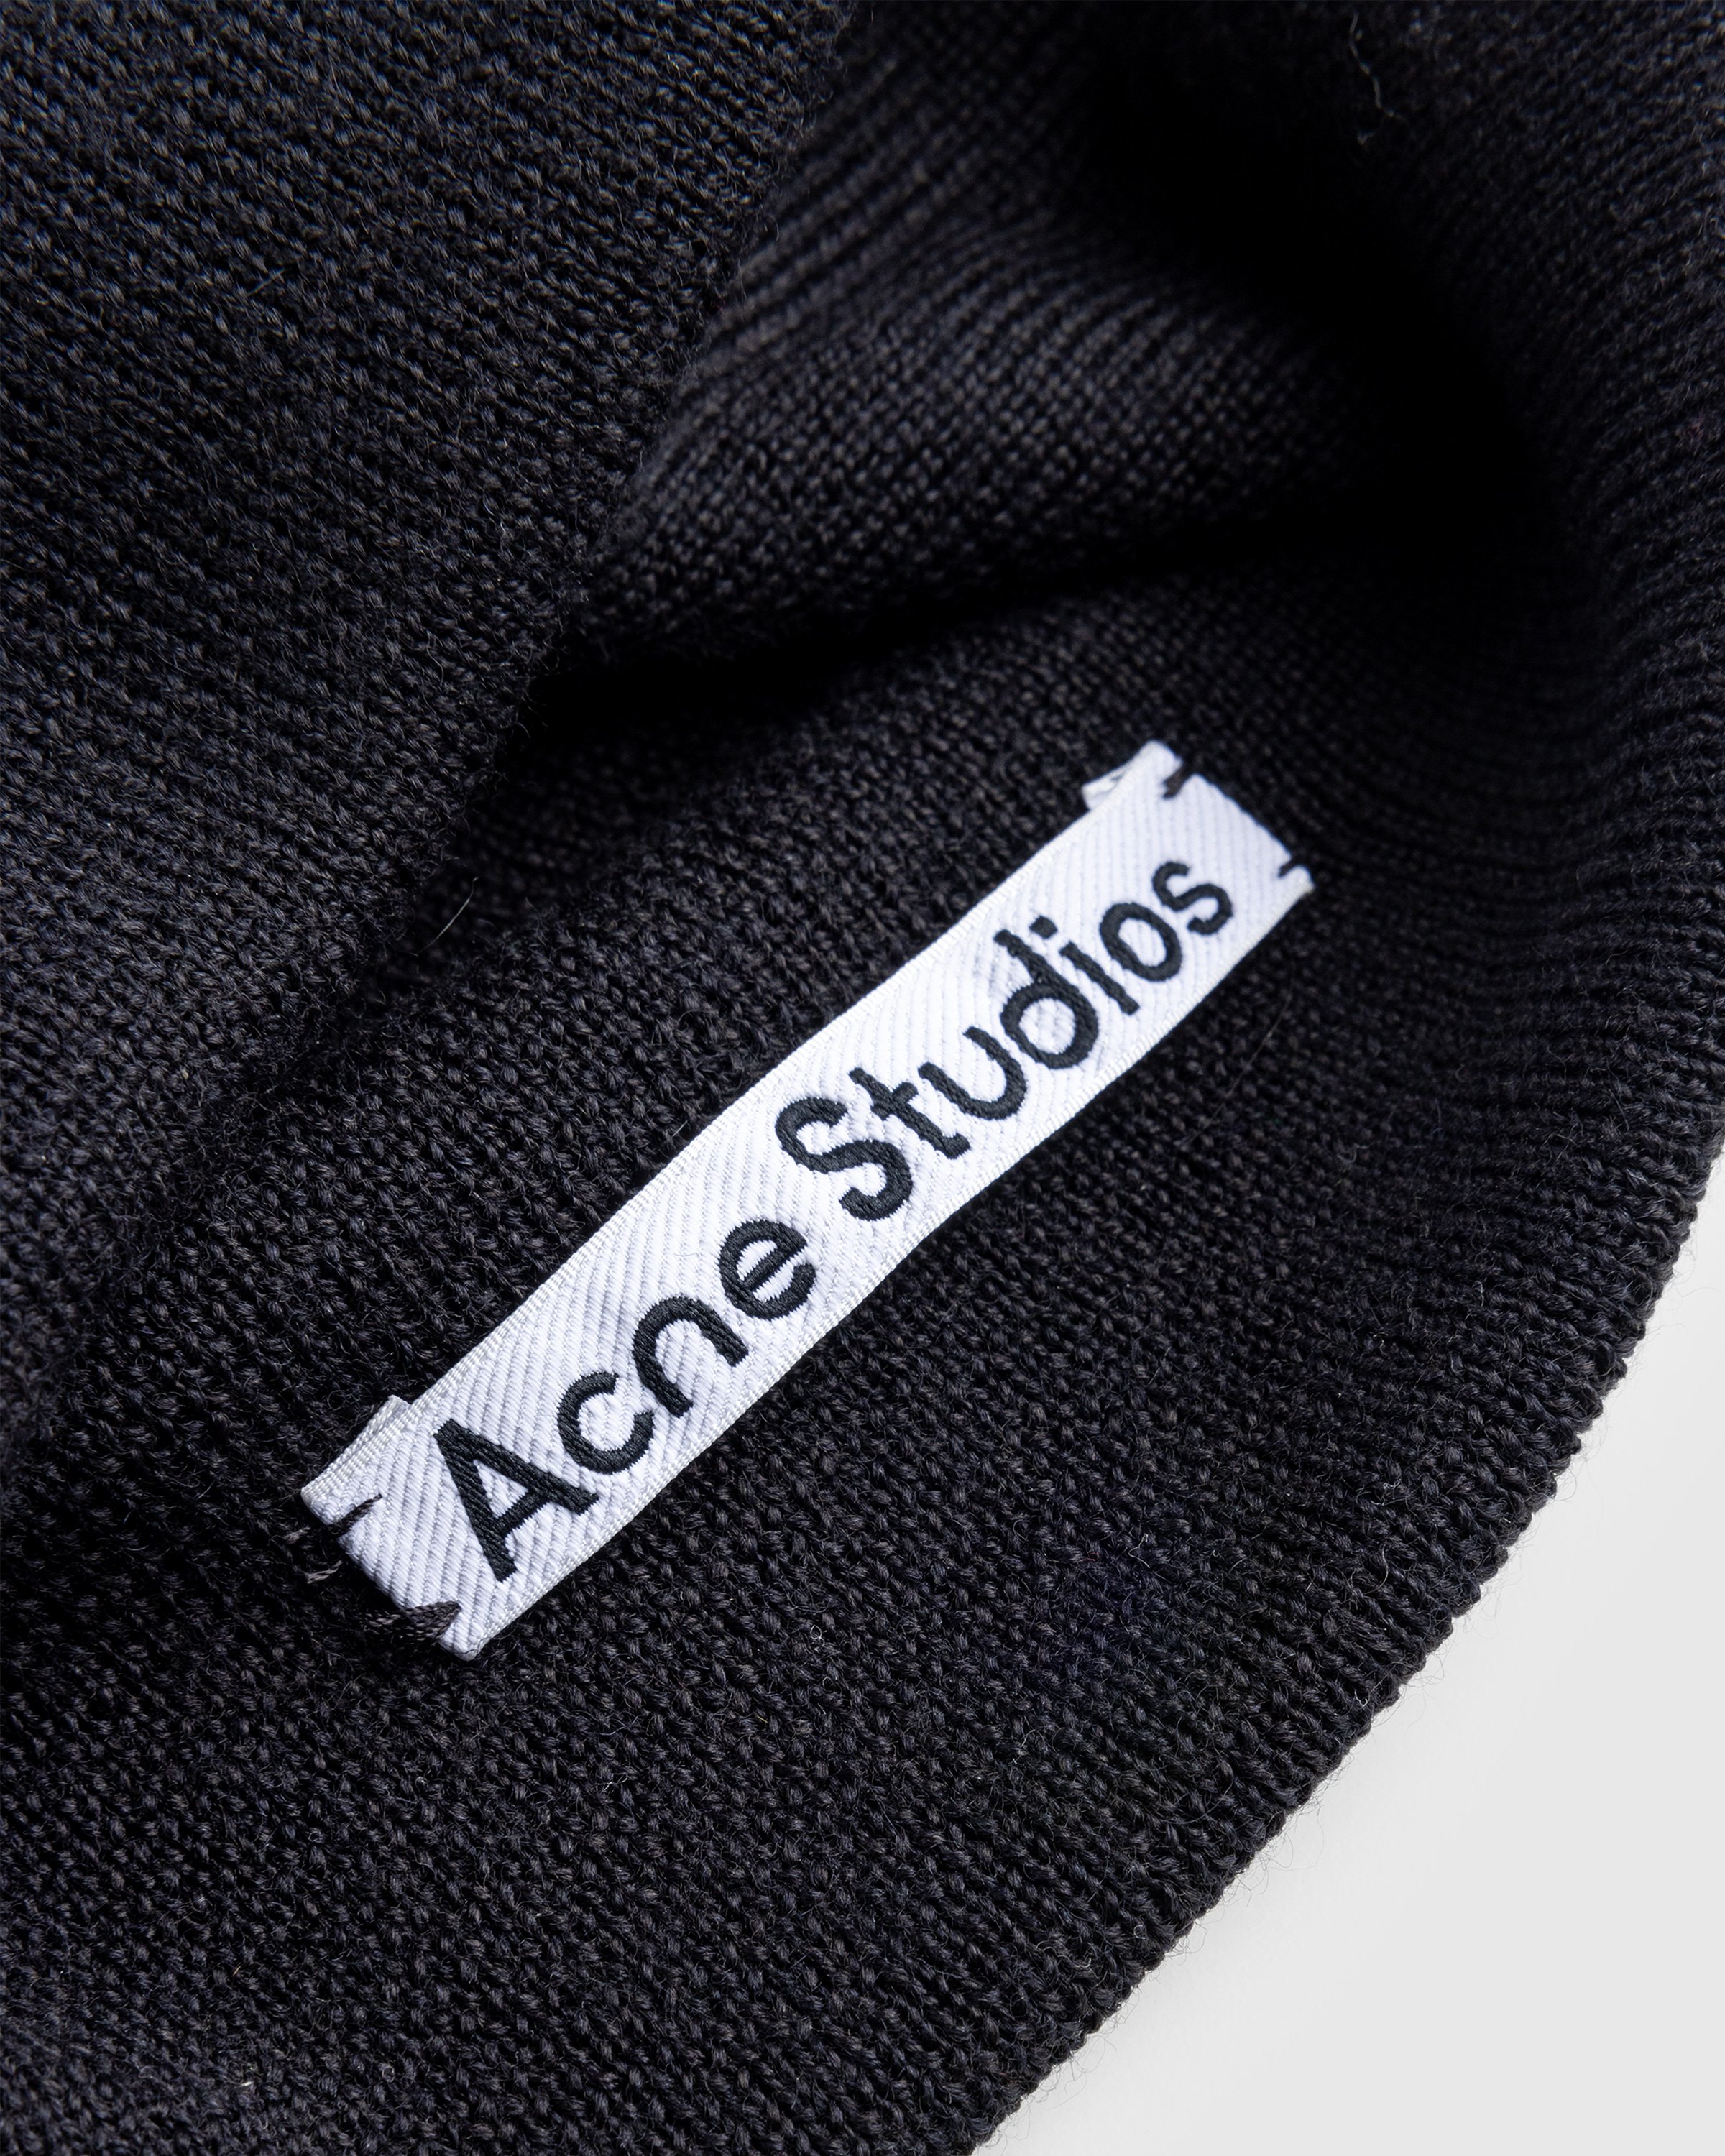 Acne Studios - FN-UX-HATS000252 Black - Accessories - Black - Image 5